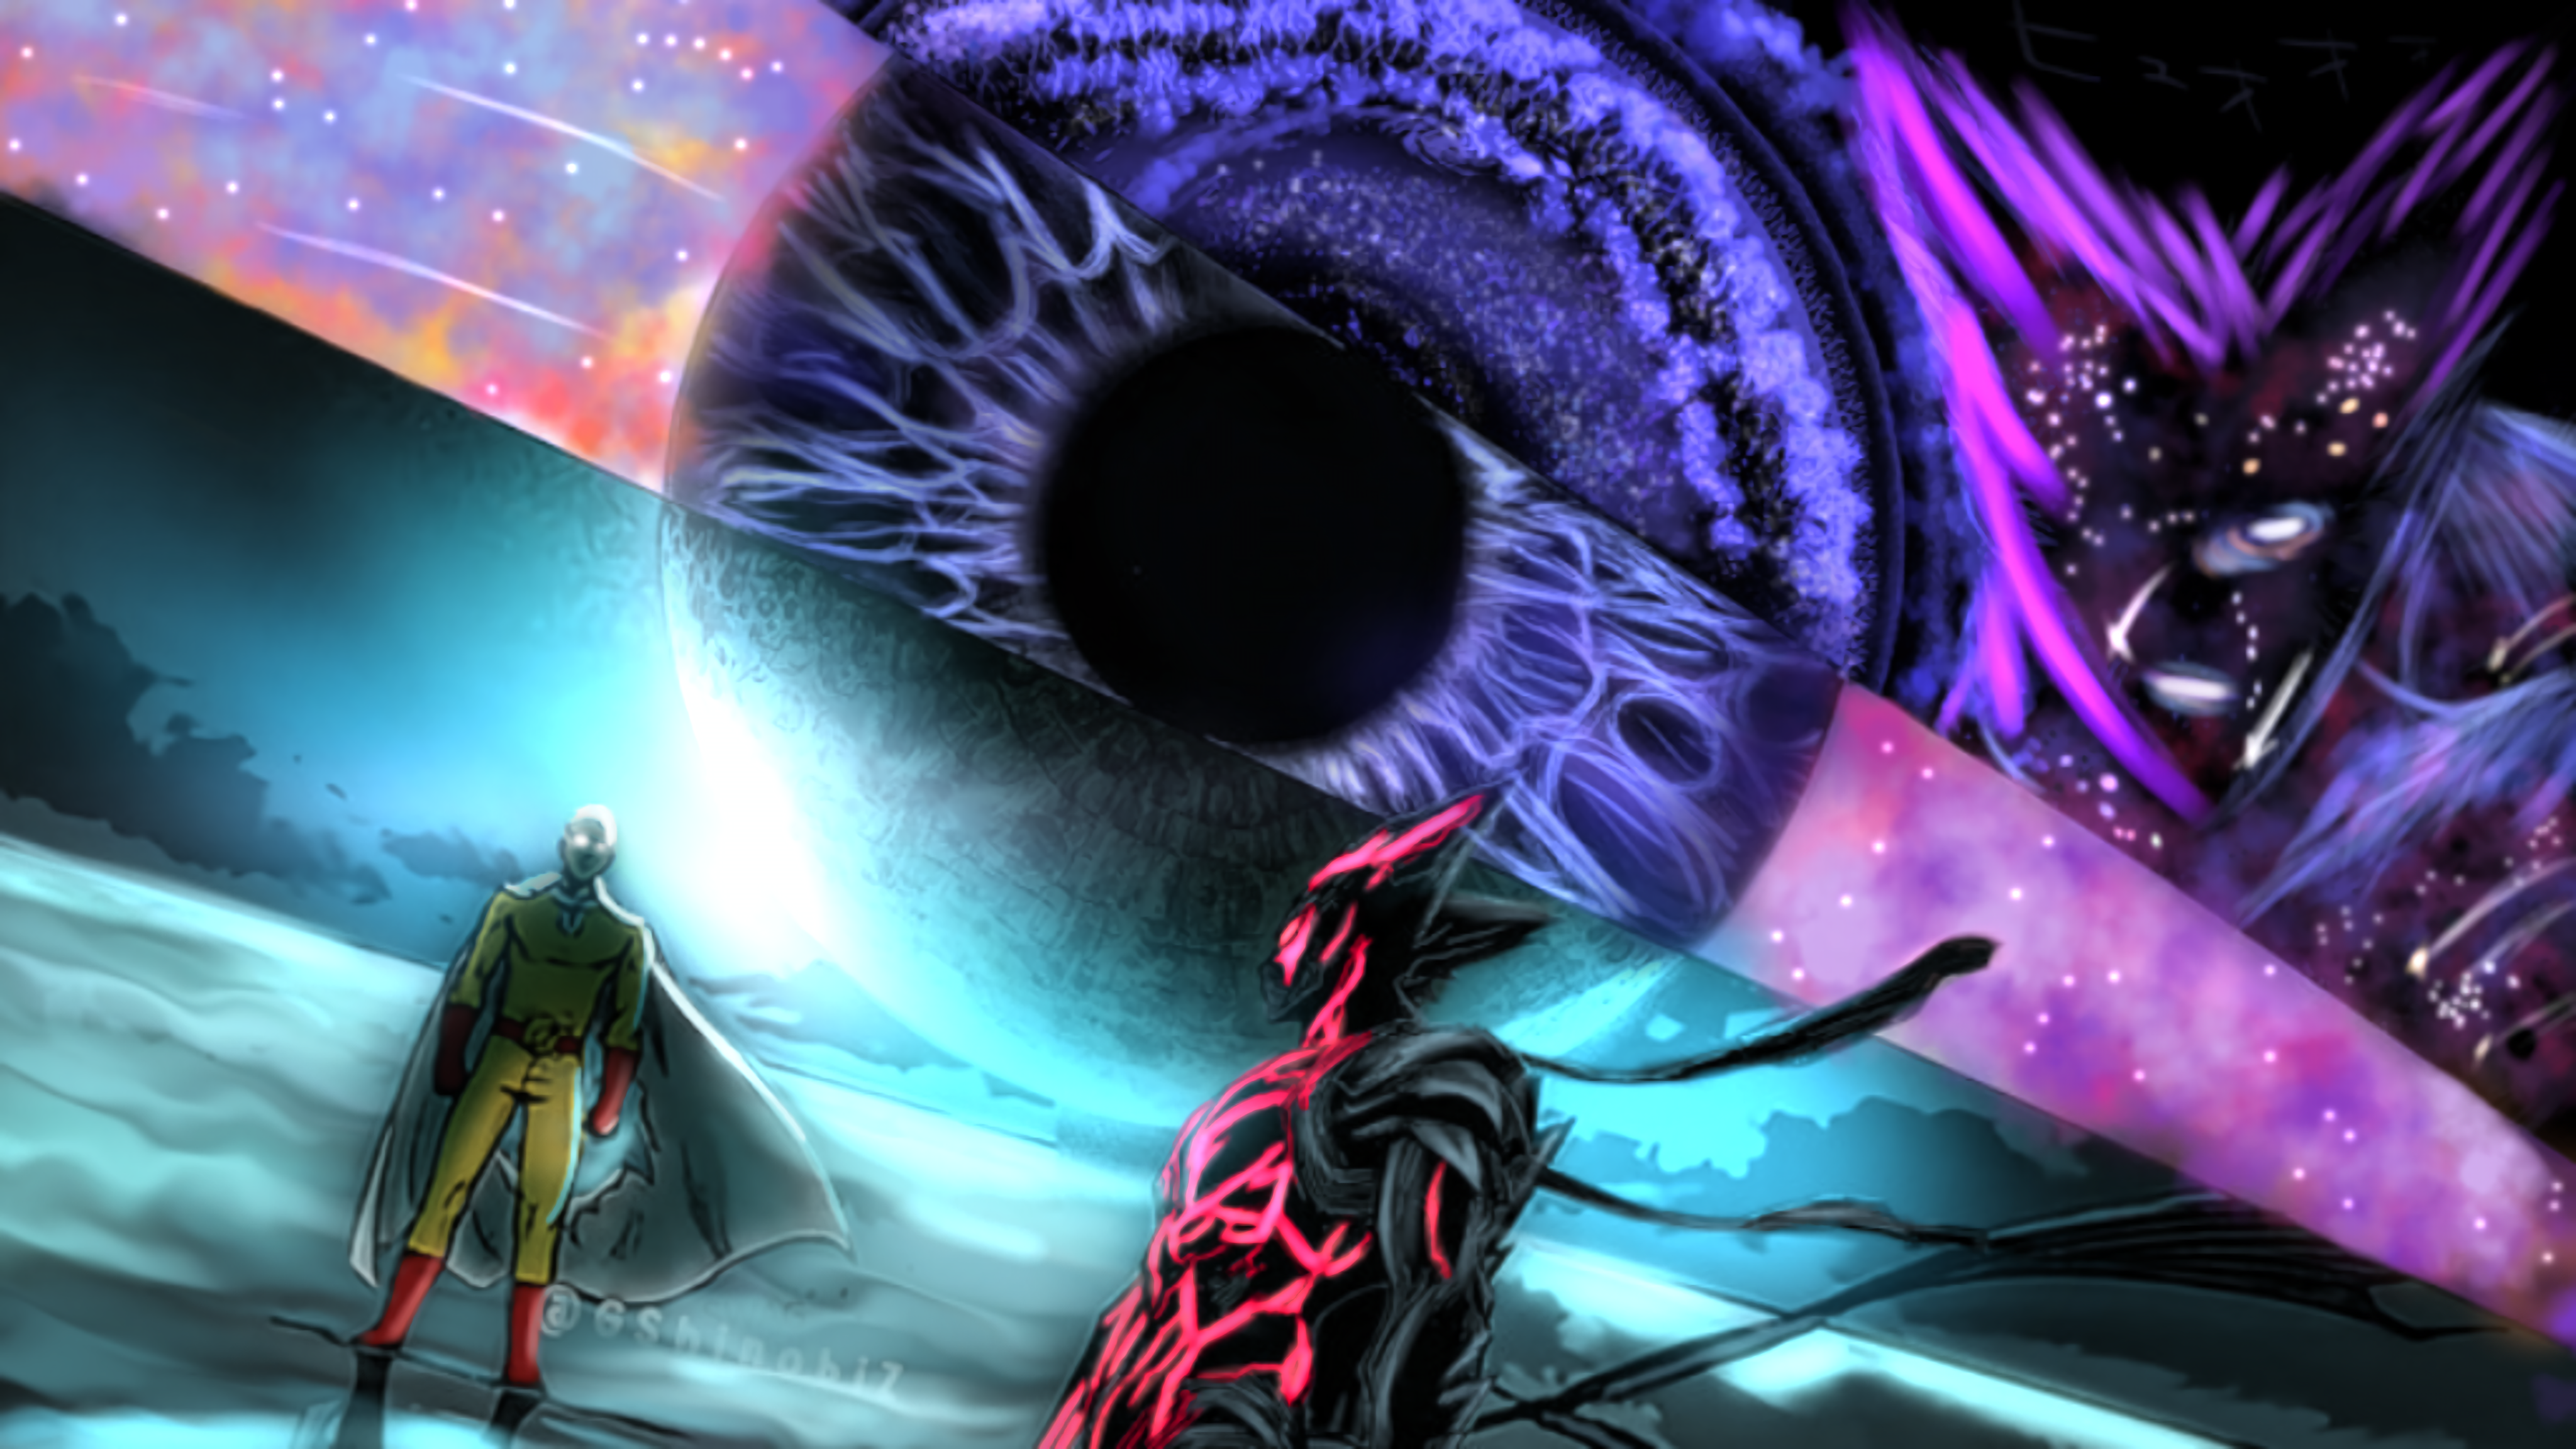 Saitama vs cosmic garou (reference used) by amoghdraws on DeviantArt